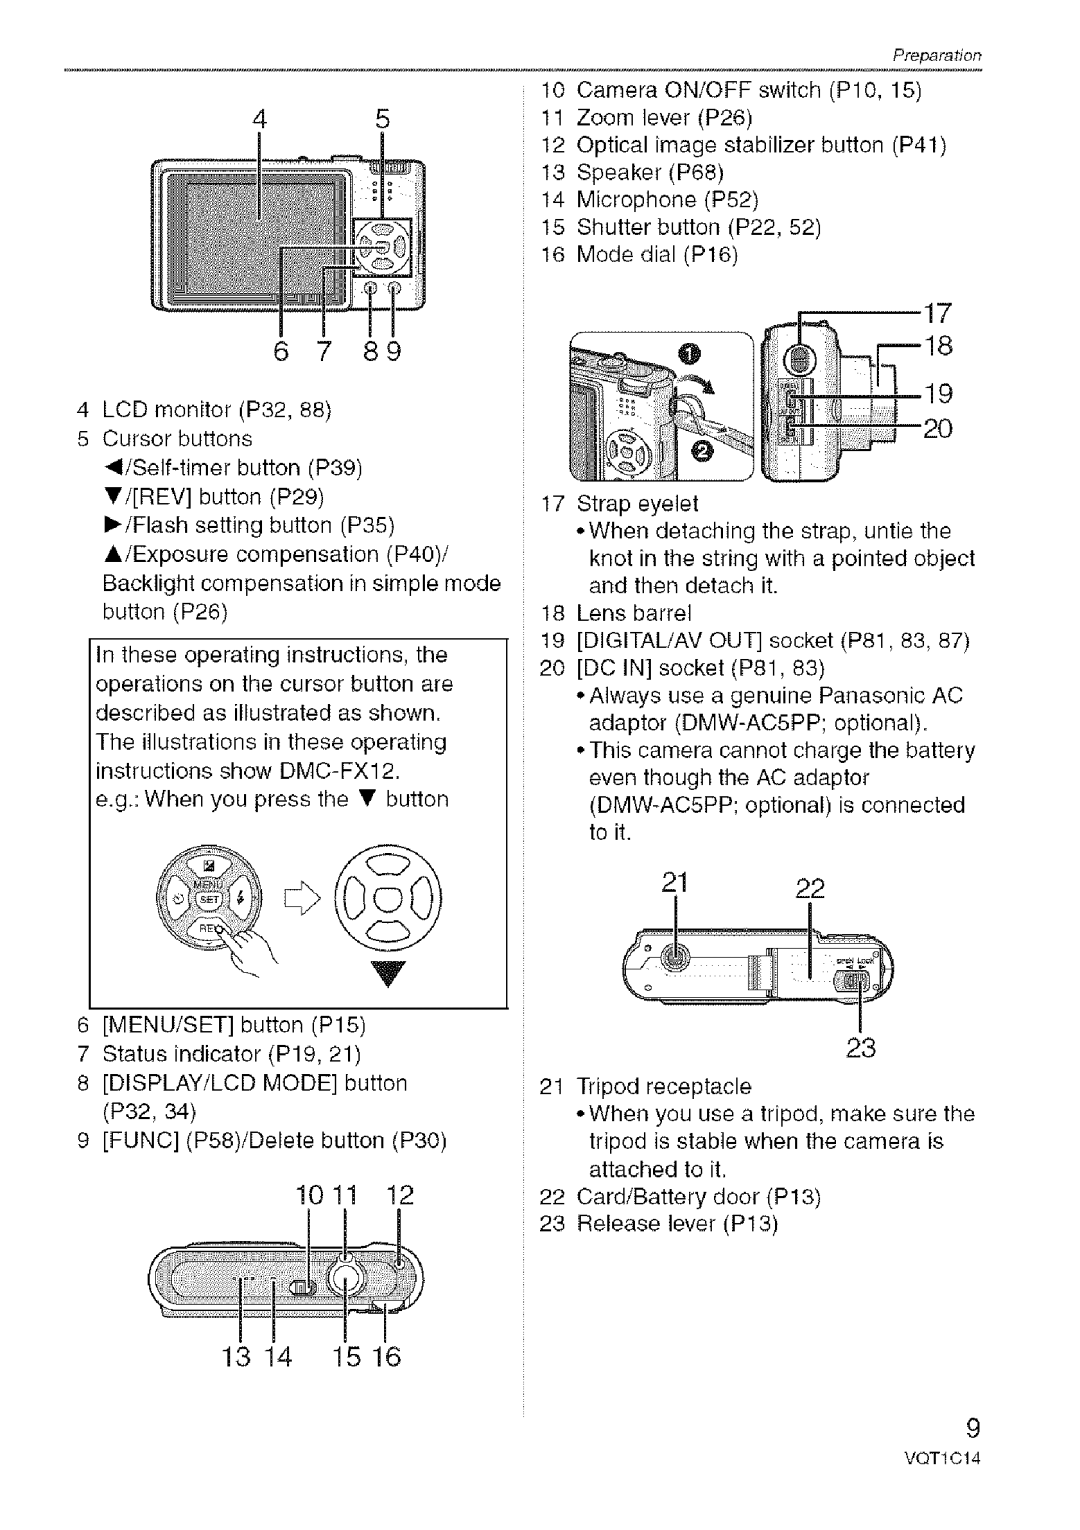 Panasonic DMC-FX10, DMC-FX12 operating instructions 1011, 13 14 15 